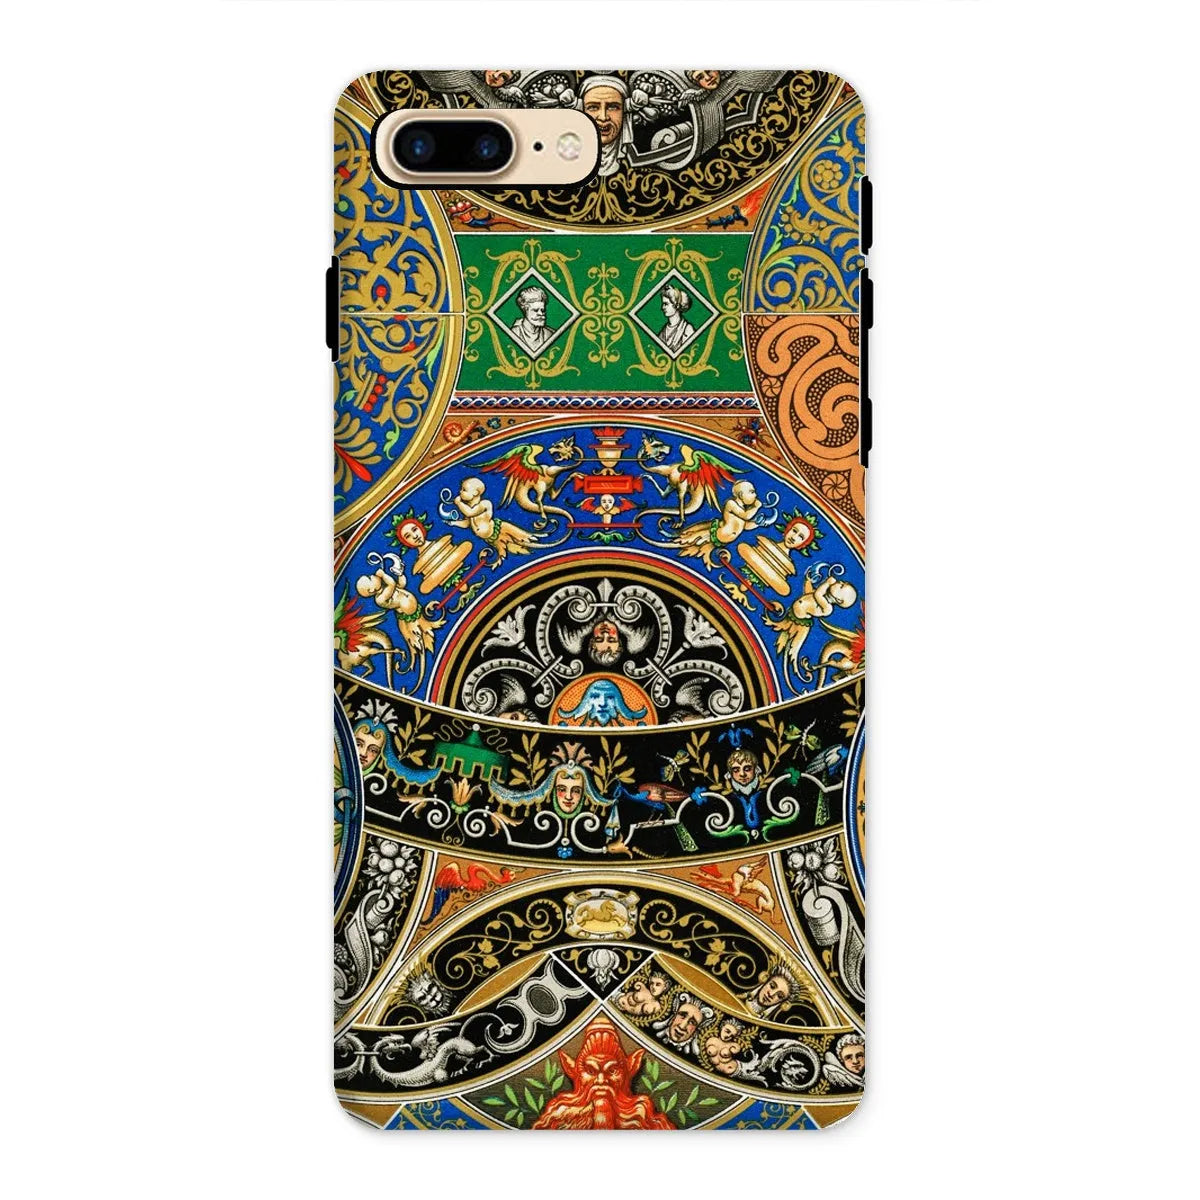 Renaissance Pattern 2 By Auguste Racinet Tough Phone Case - Iphone 8 Plus / Gloss - Mobile Phone Cases - Aesthetic Art